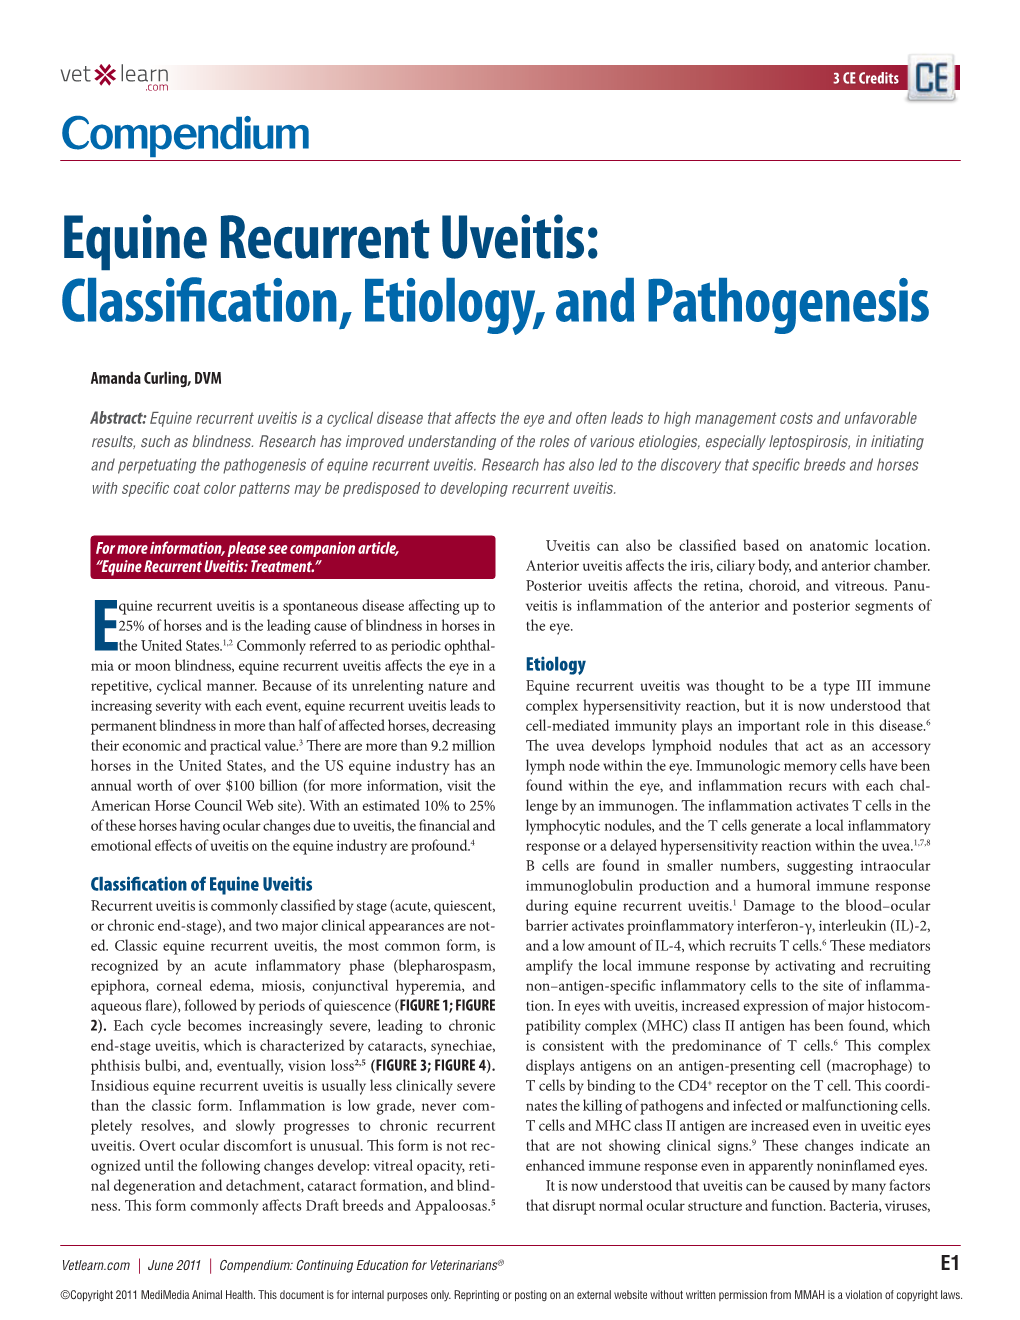 Equine Recurrent Uveitis: Classification, Etiology, and Pathogenesis